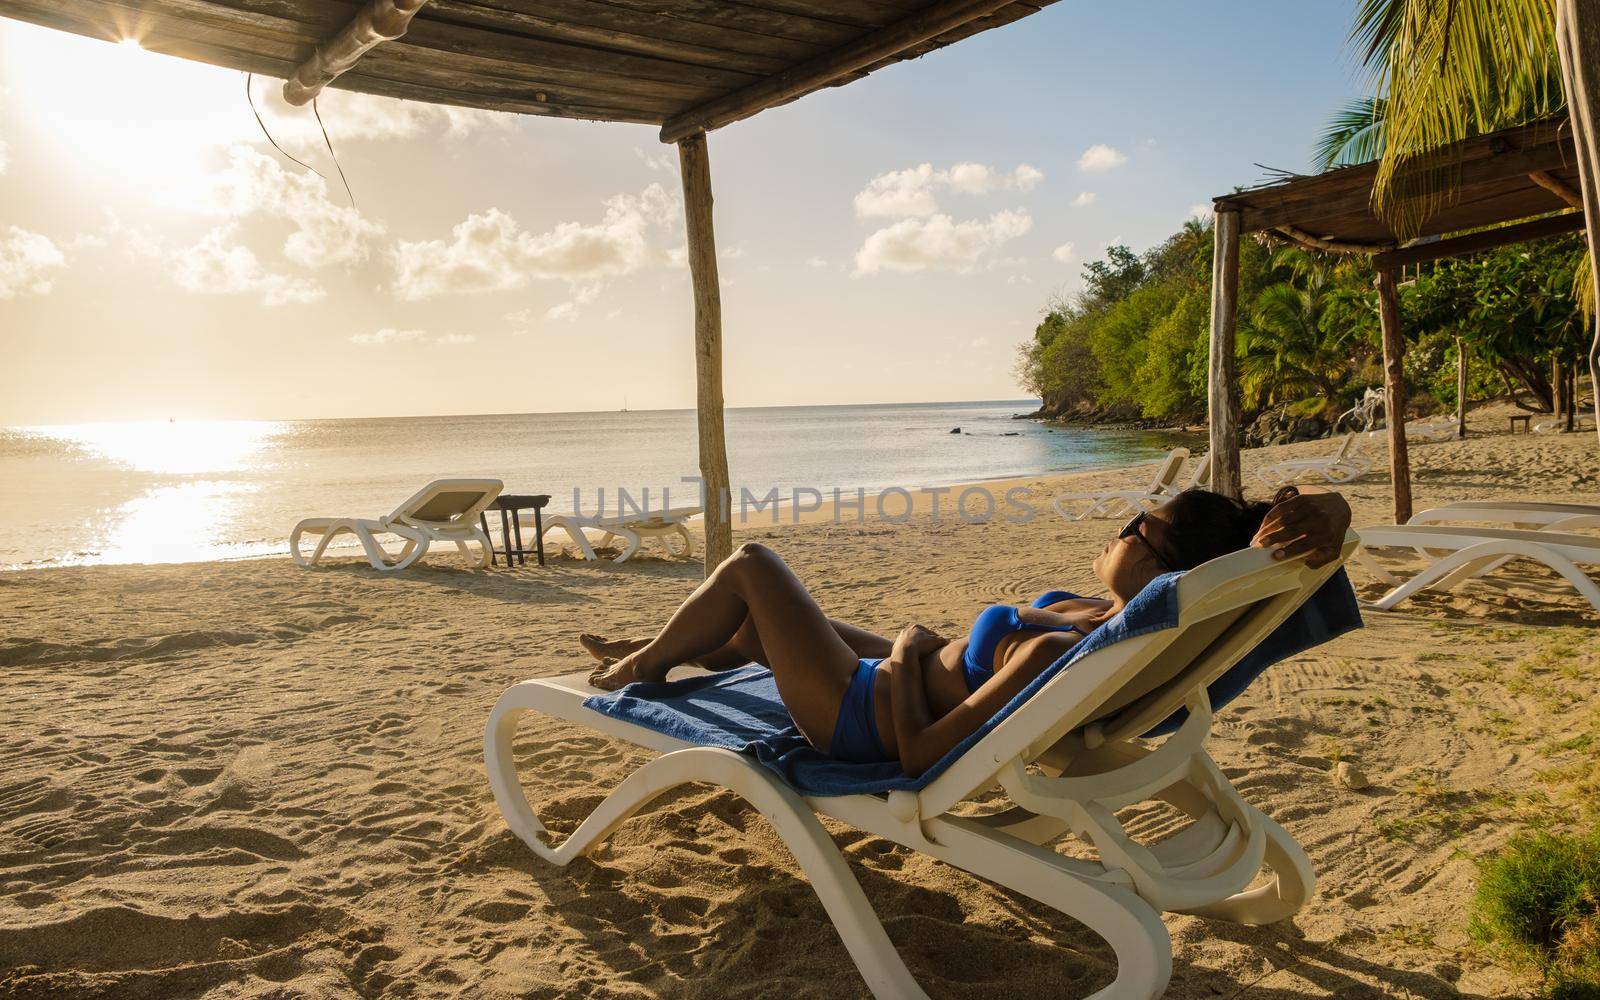 Asian women relaxing on a beach chair during sunset at Saint Lucia Caribbean, Asian women tanning on the beach